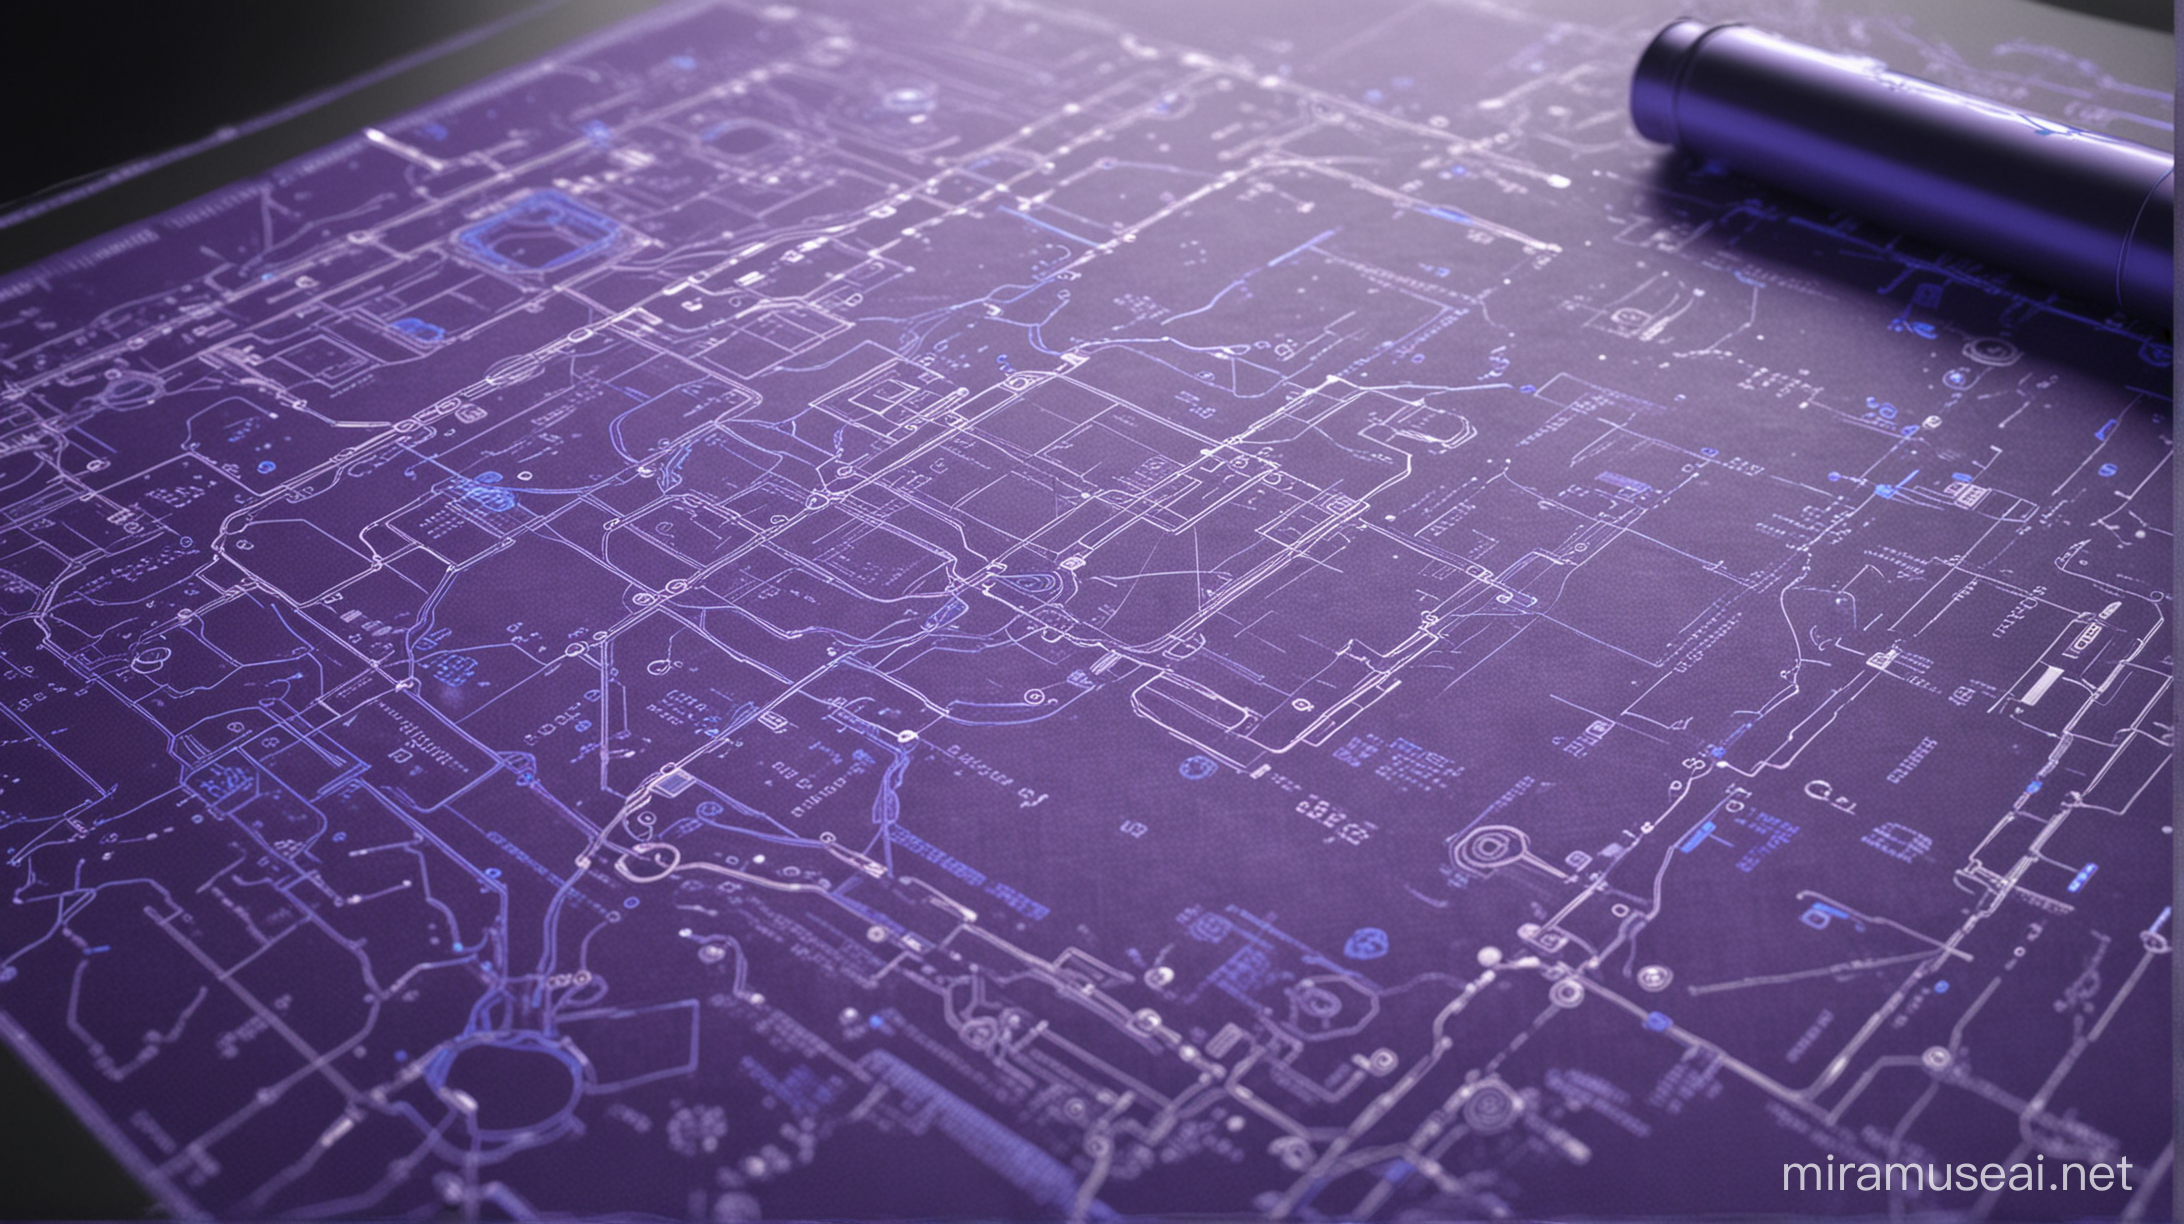 Please create a 4K photorealistic HD image of a high tech purple and blue blueprint 
